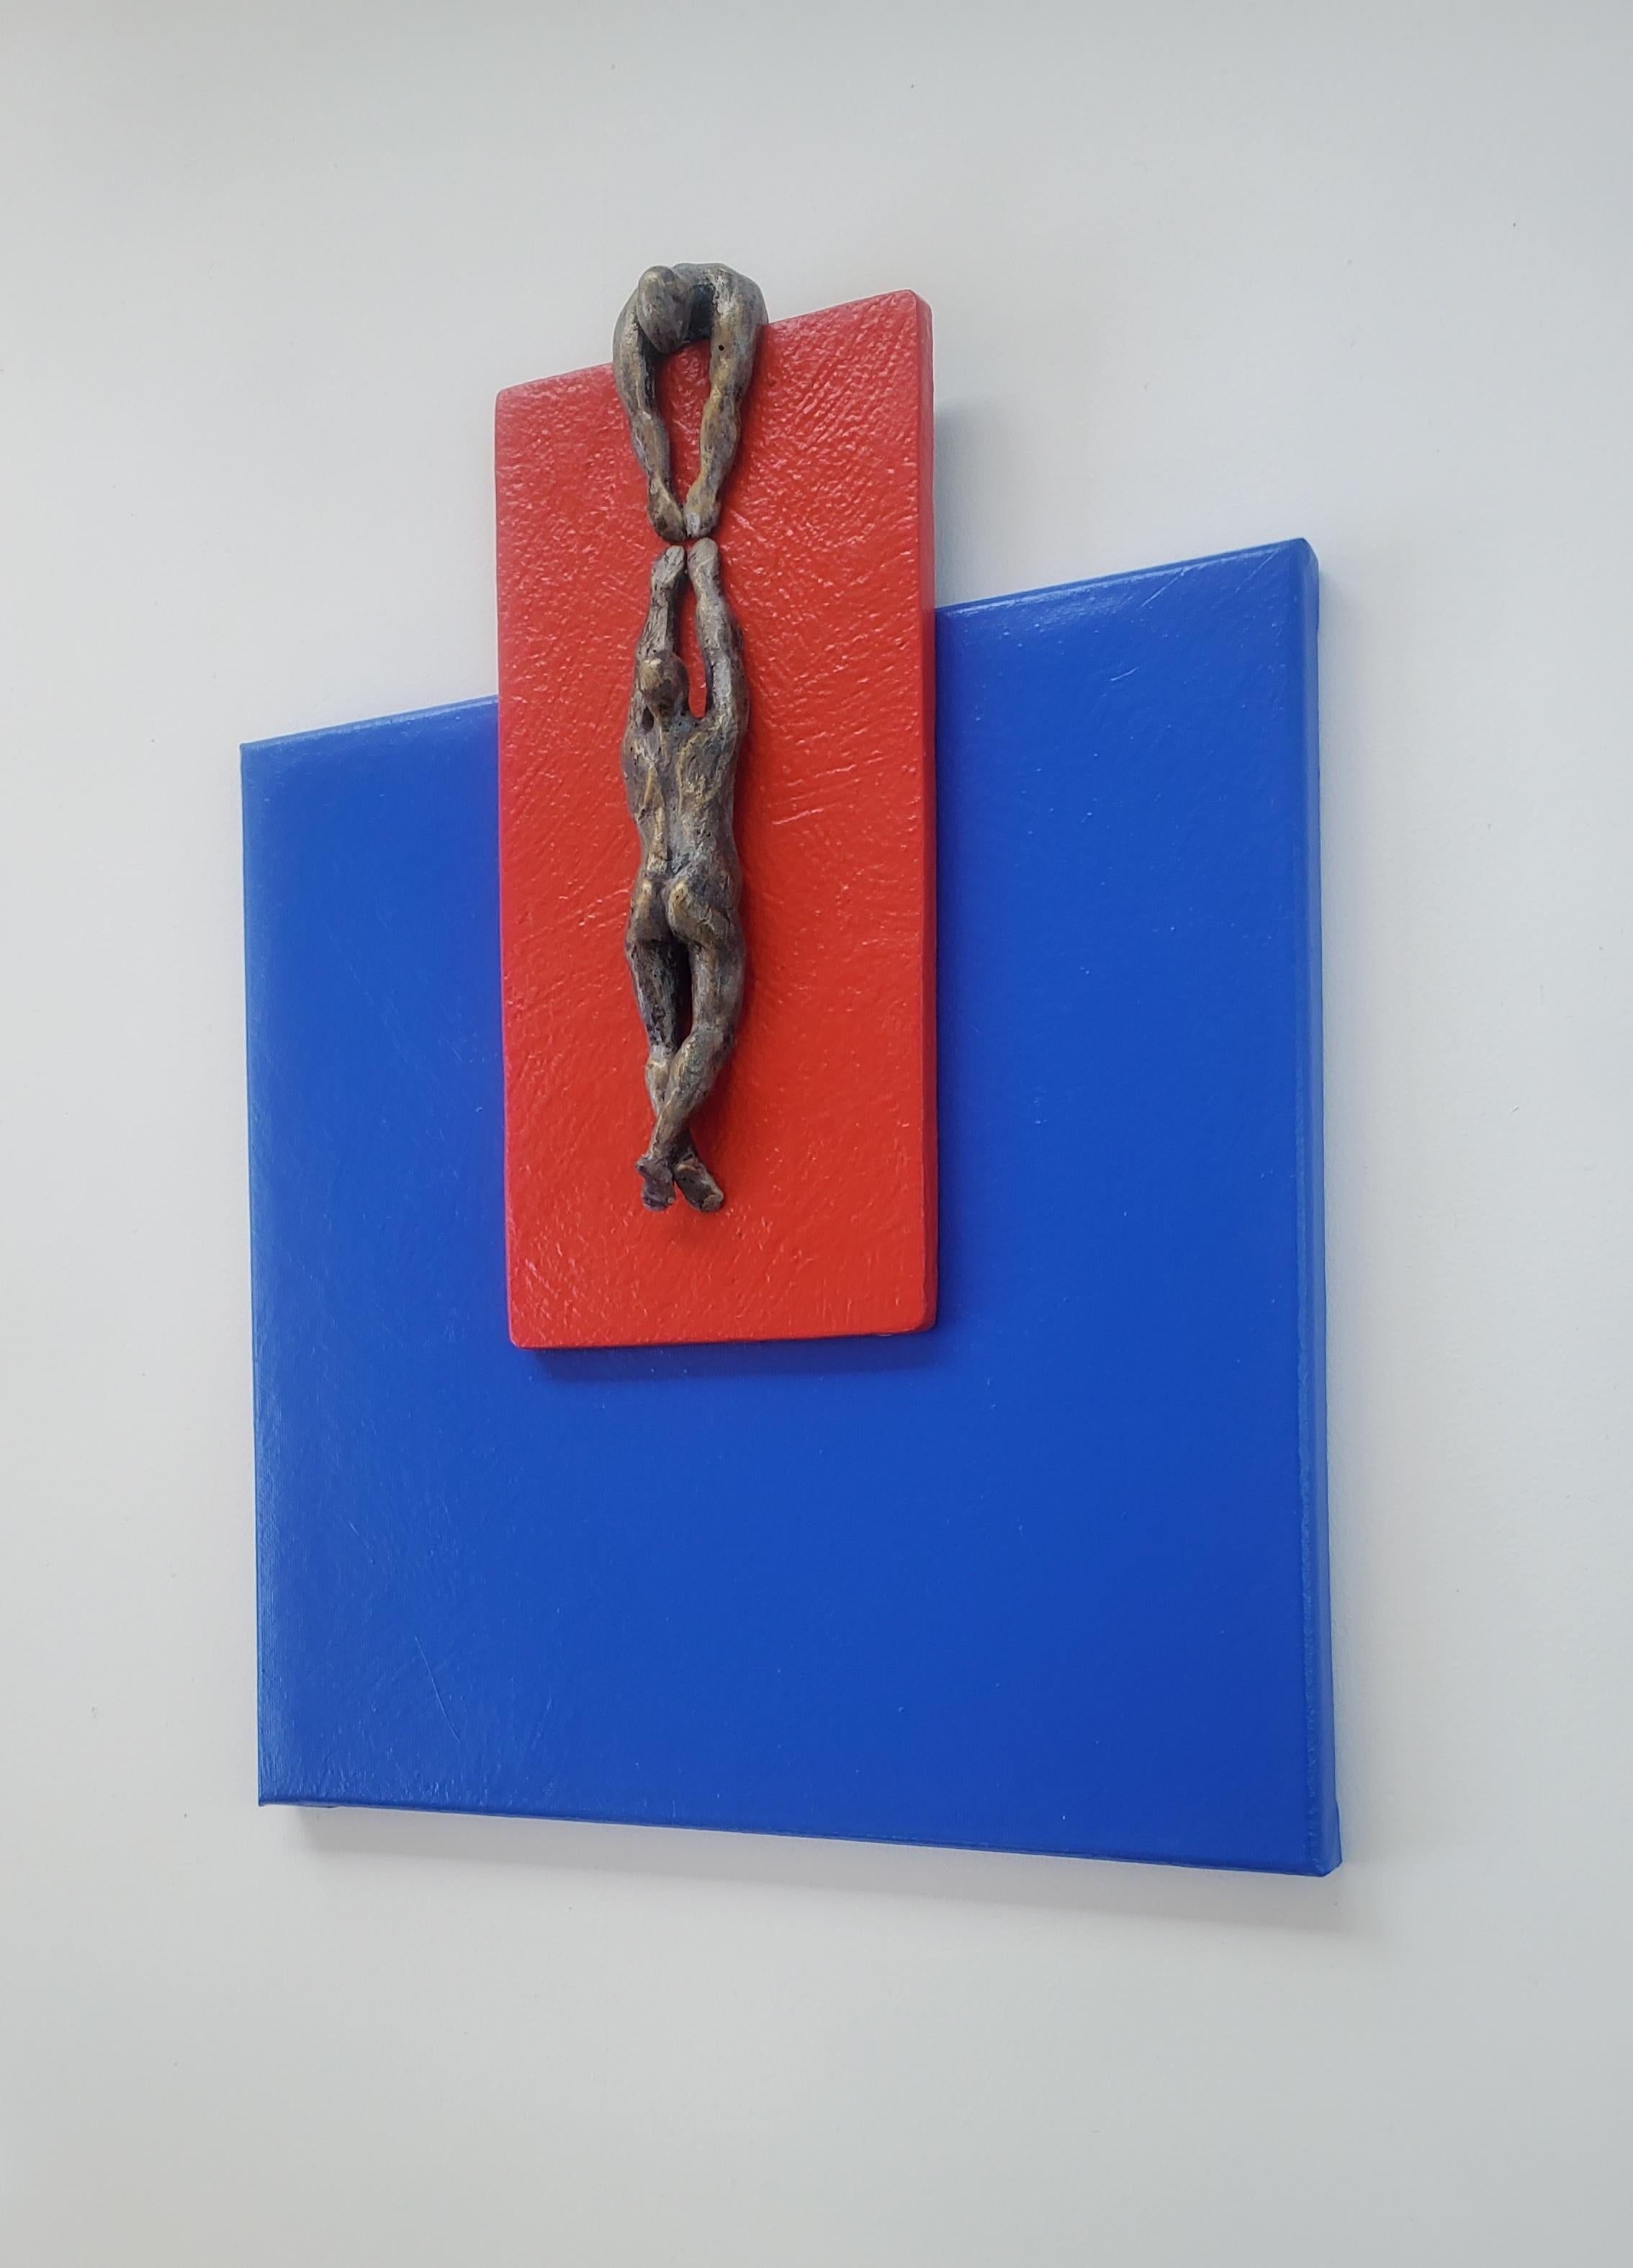 Climber on Red N Blue Square, peinture d'origine - Contemporain Mixed Media Art par Yelitza Diaz